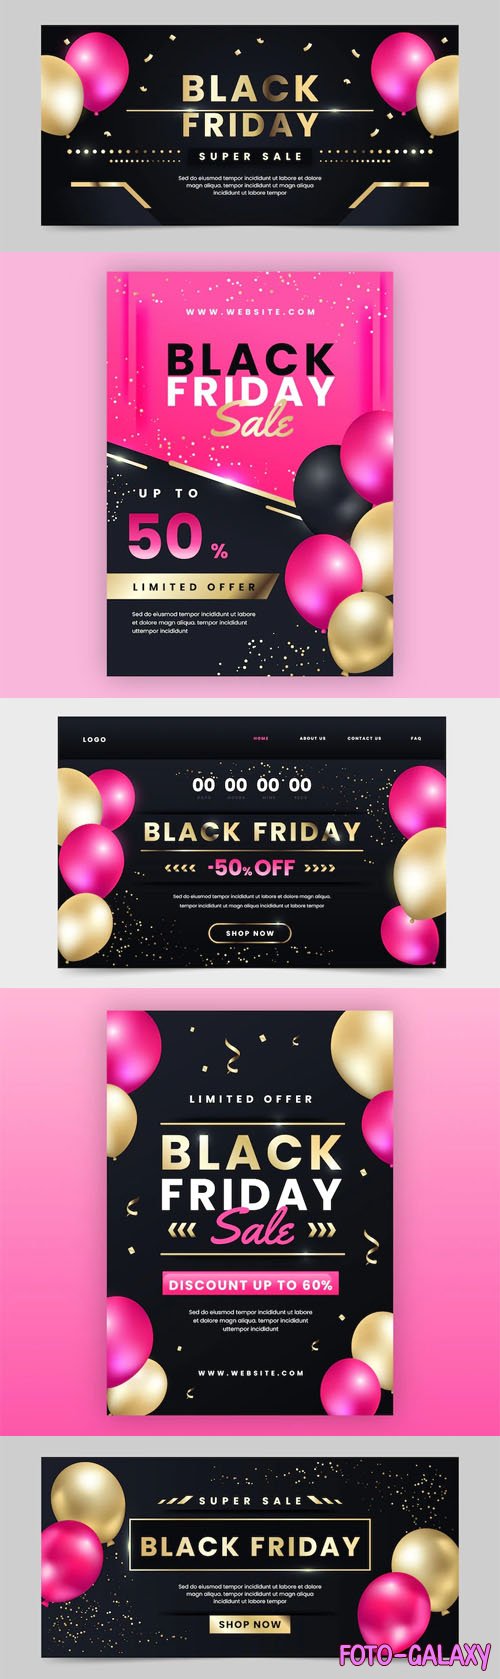 Black Friday - 10 Gradient Pink & Black Vector Templates Pack